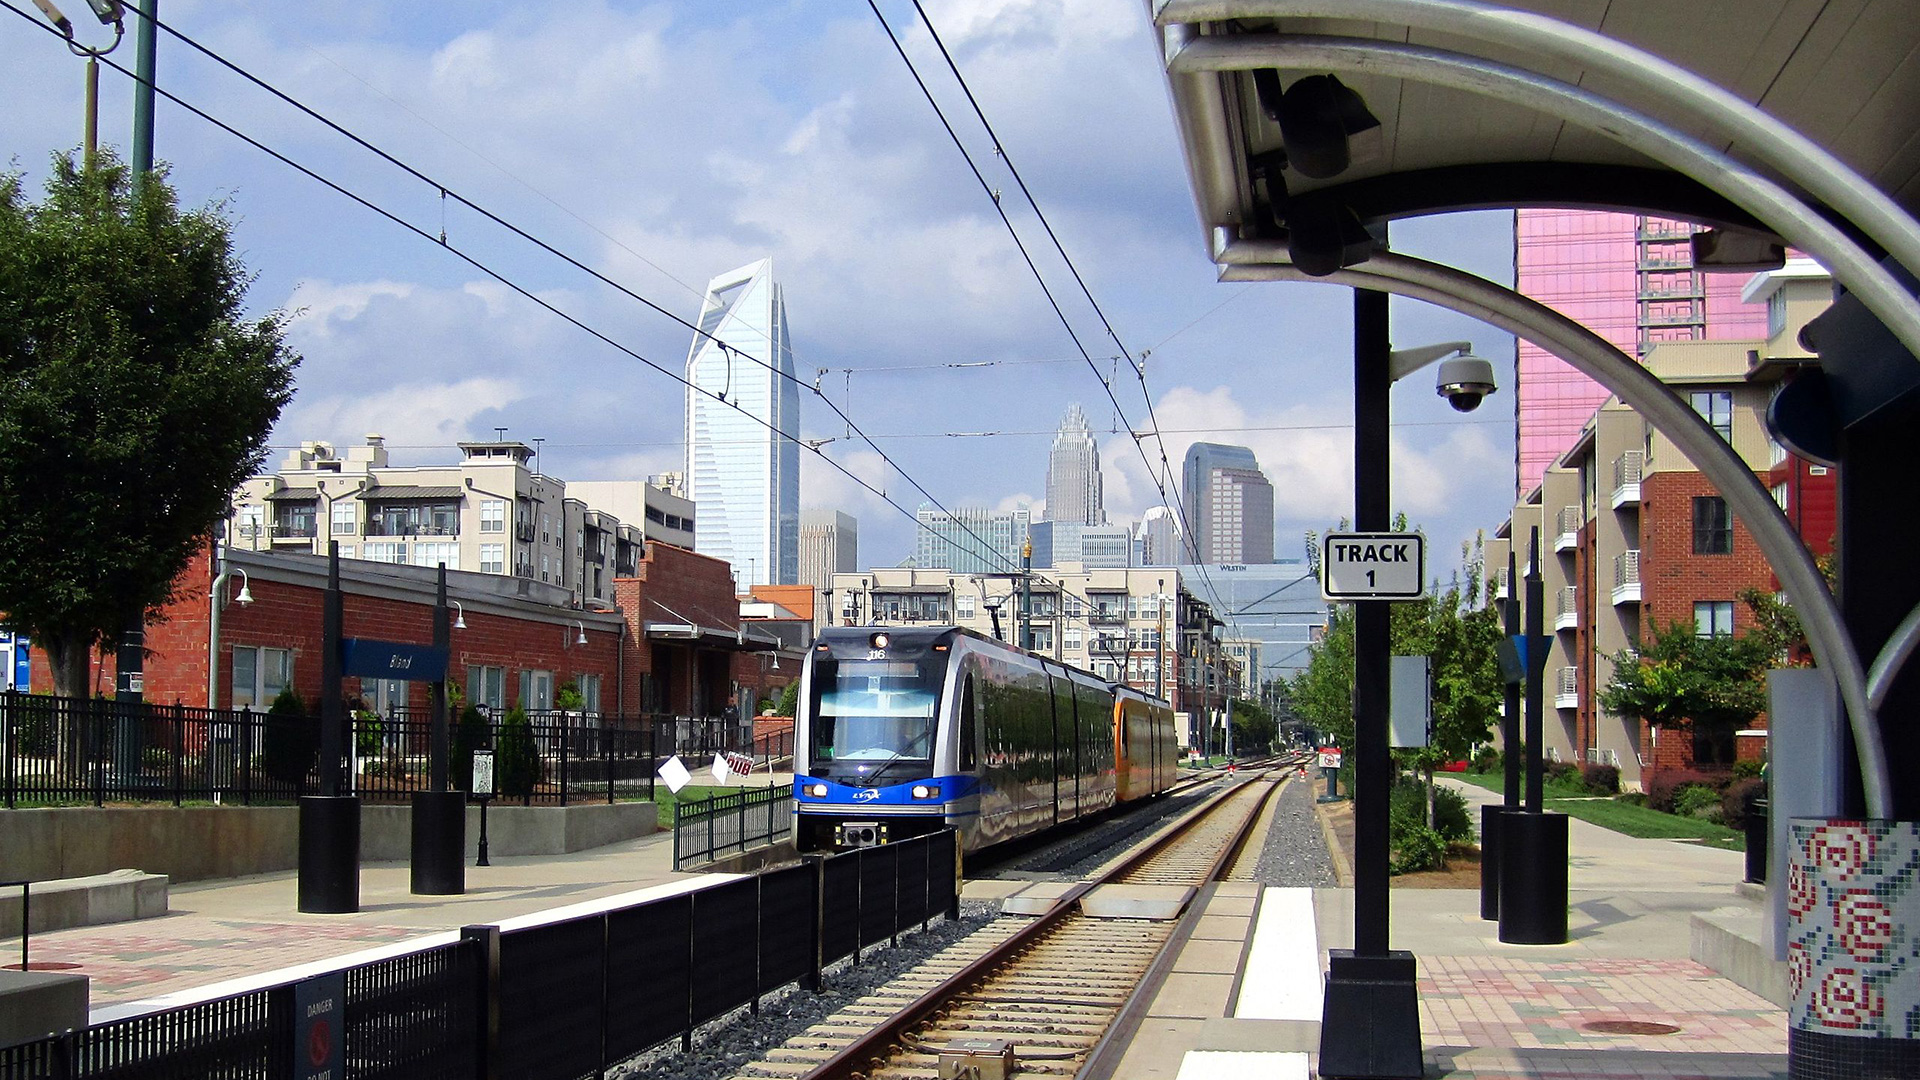 Light rail pulls into the station at Bland Street, Charlotte, North Carolina.